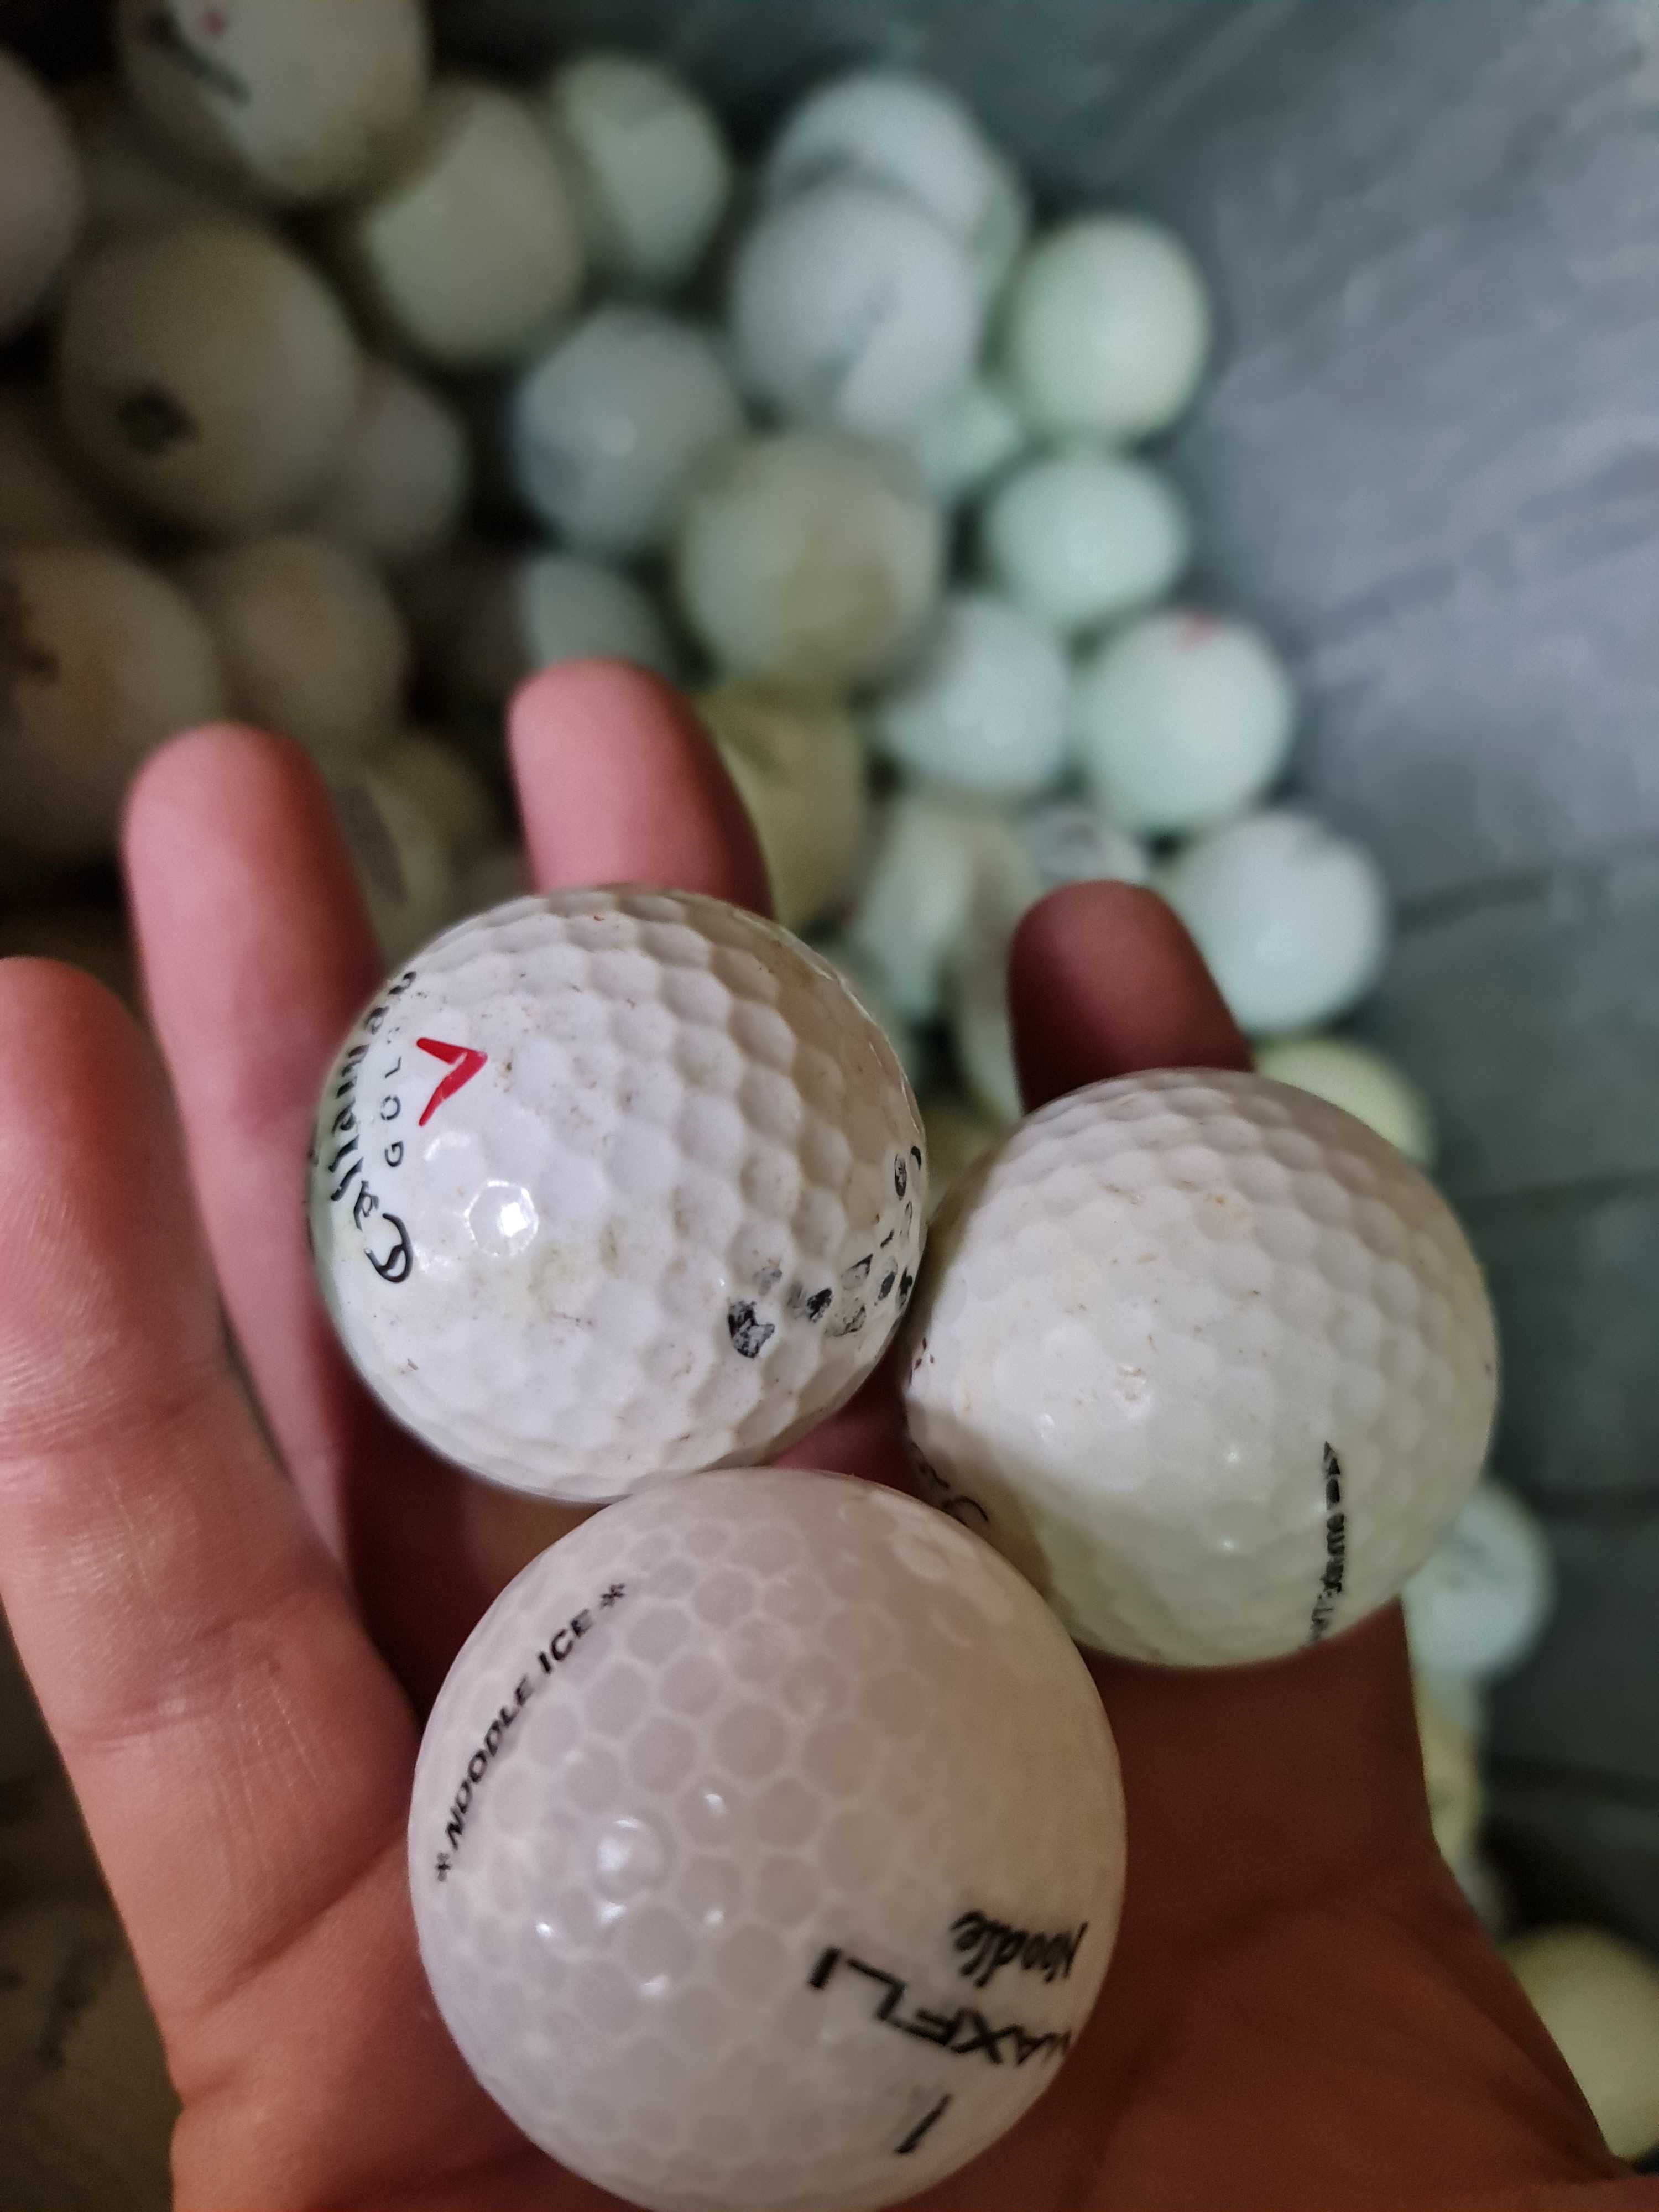 mingi de golf 1000 bucati 1 euro bucata